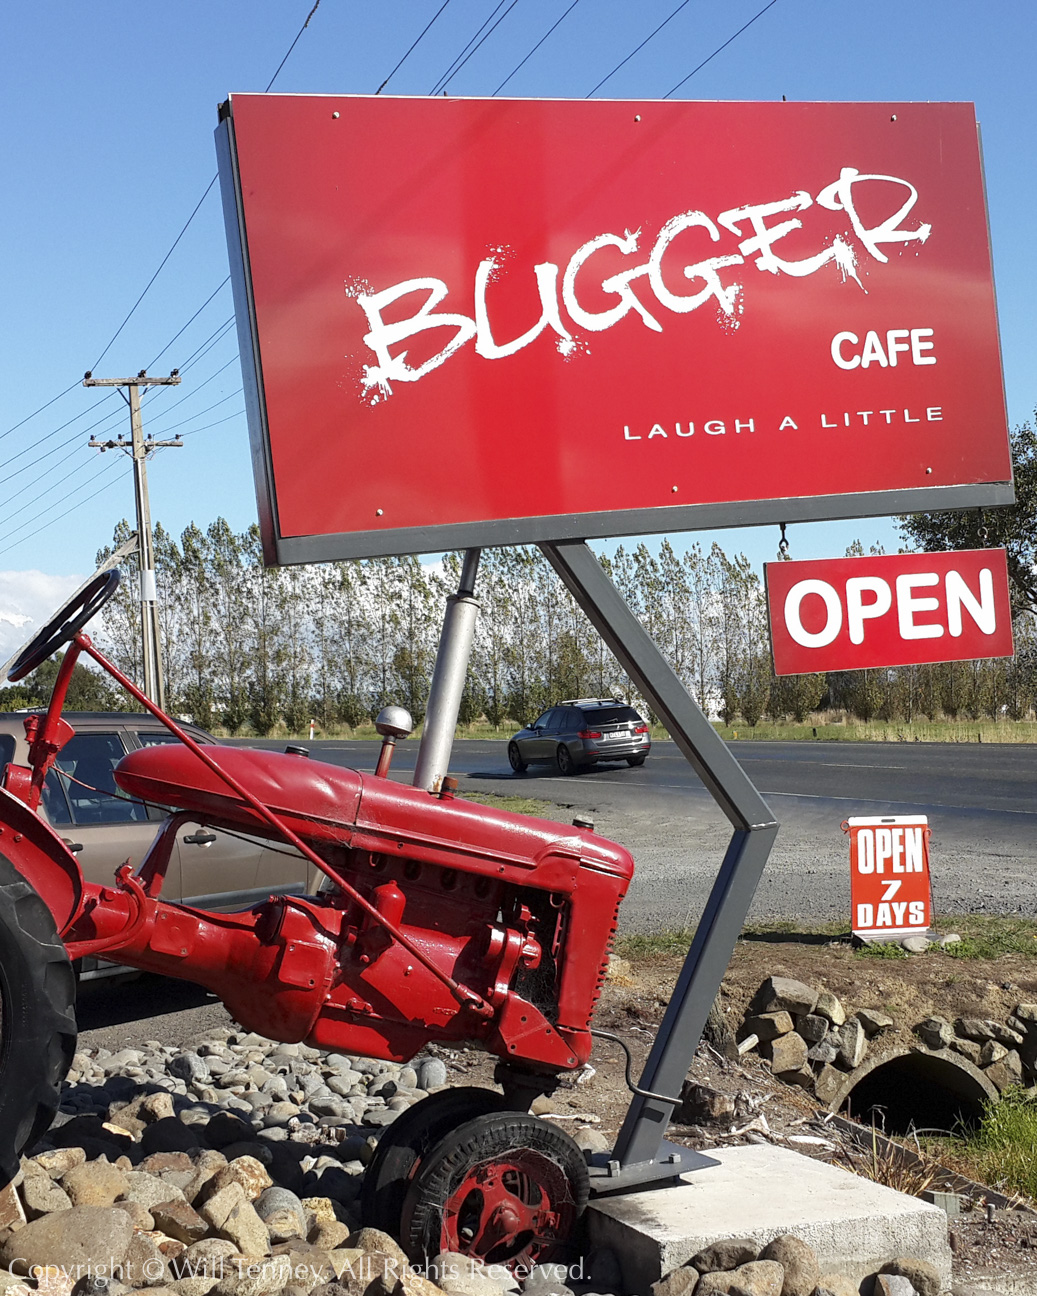 Bugger Café: Photograph by Will Tenney